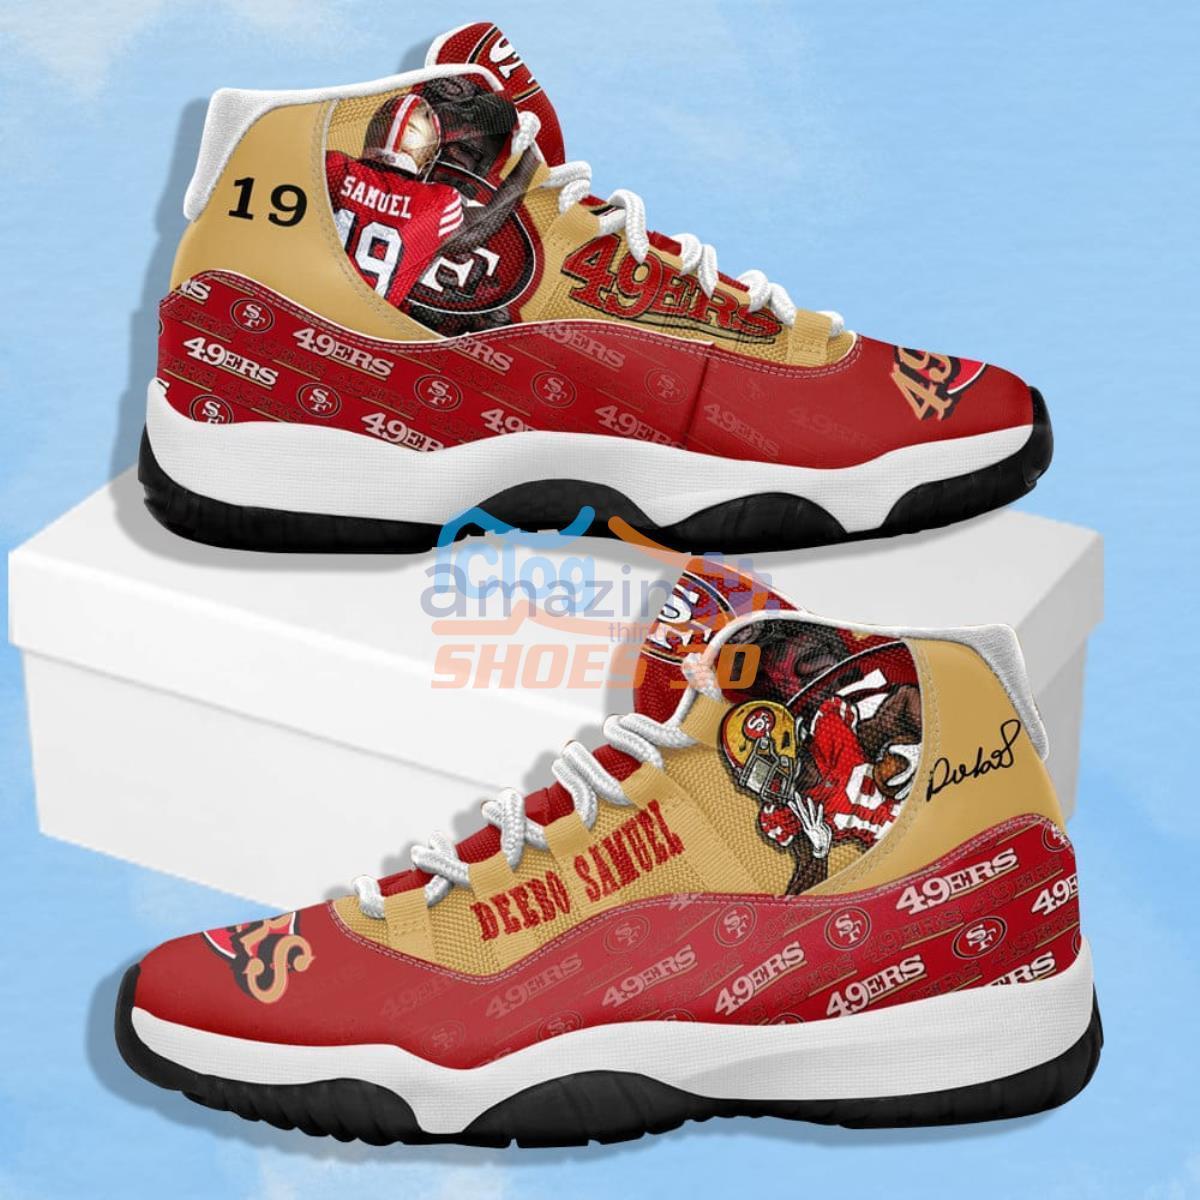 San Francisco 49ers - Deebo Samuel Impressive Design Air Jordan 11 Shoes